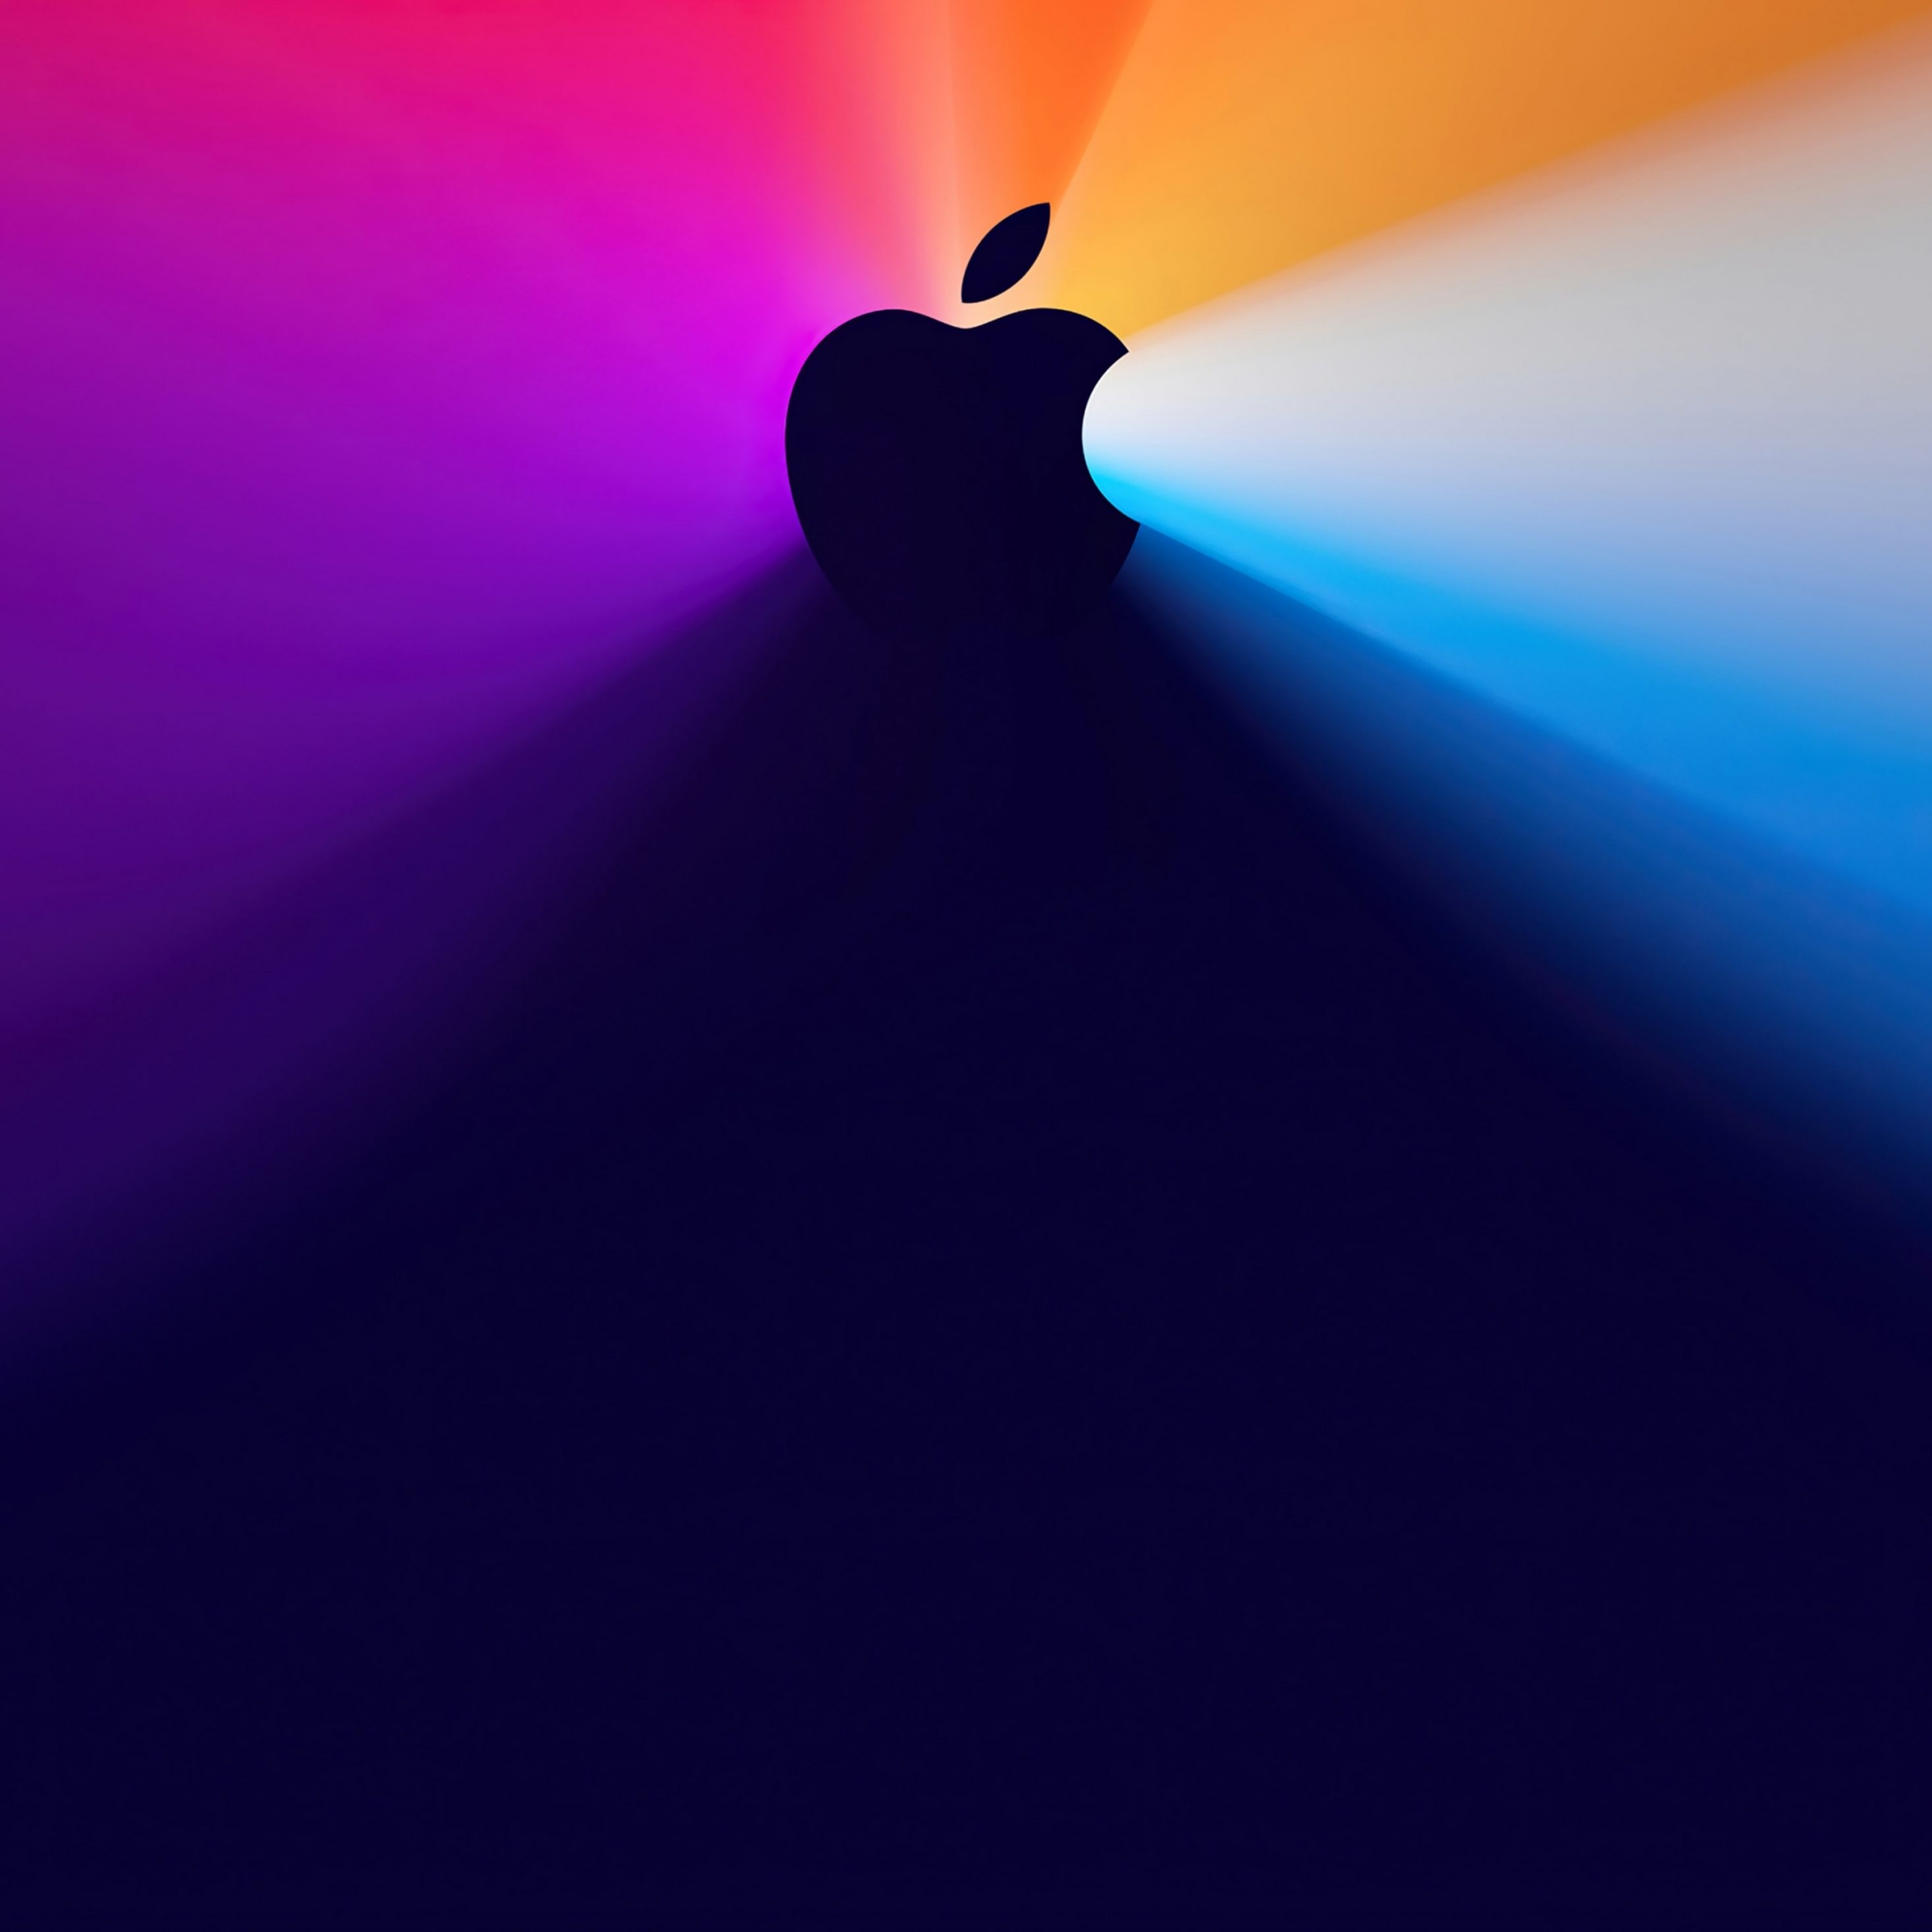 2934x2934 iOS iPad wallpaper 4k Colourful iPhone 12 Apple Logo iPad Wallpaper 2934x2934 pixels resolution